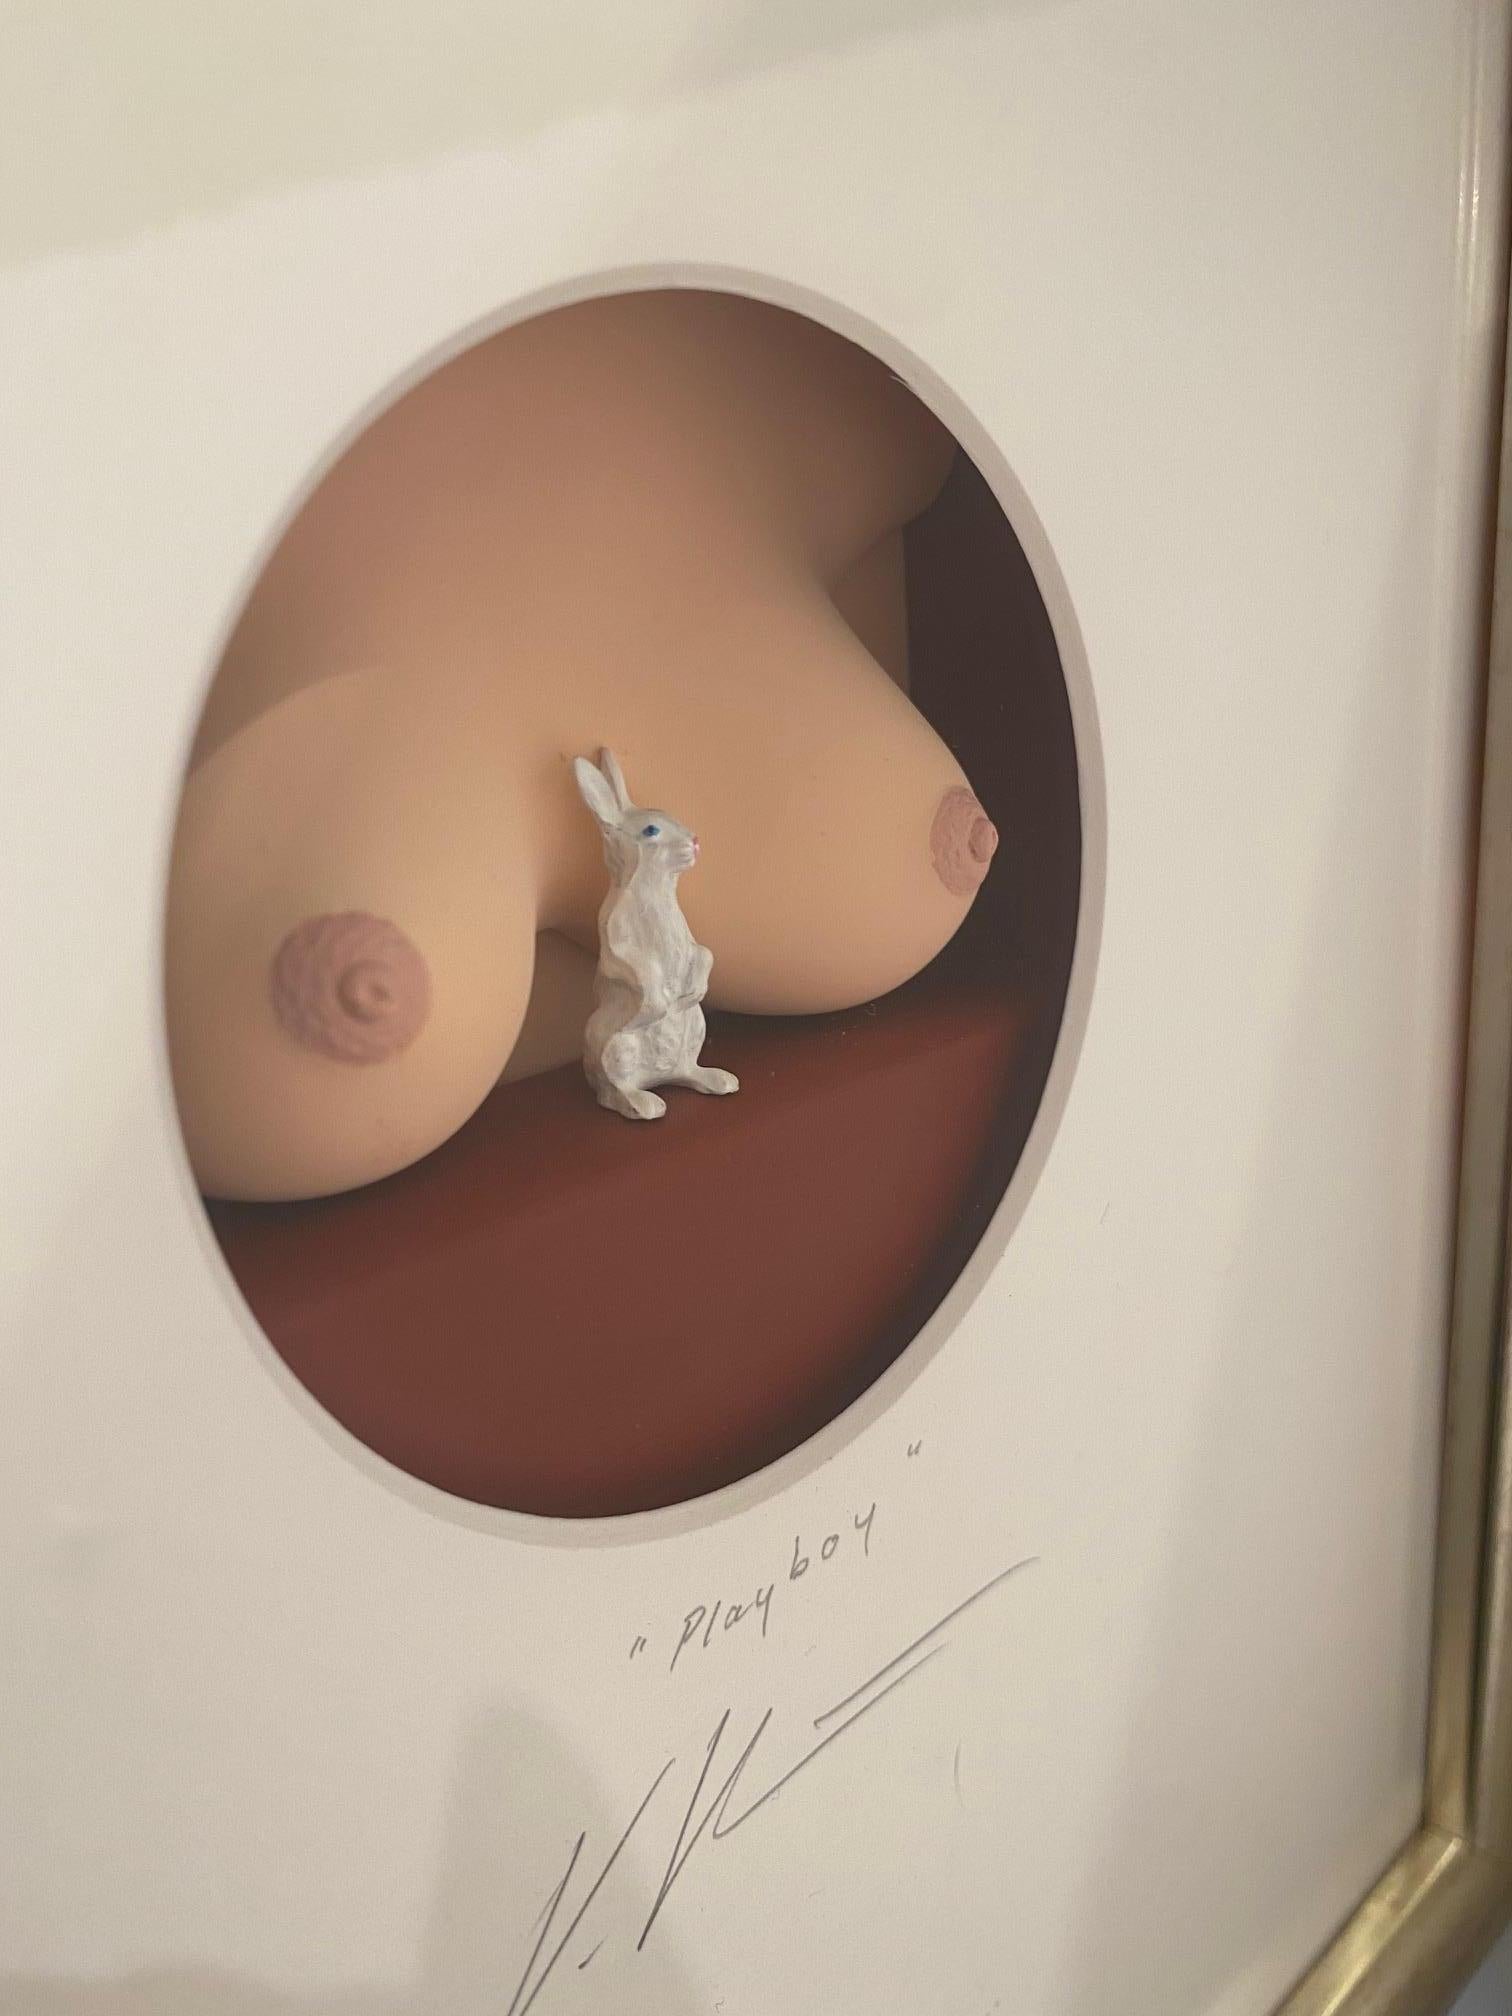 Playboy - original contemporary sexy minimalist art work by Volker Kuhn For Sale 1